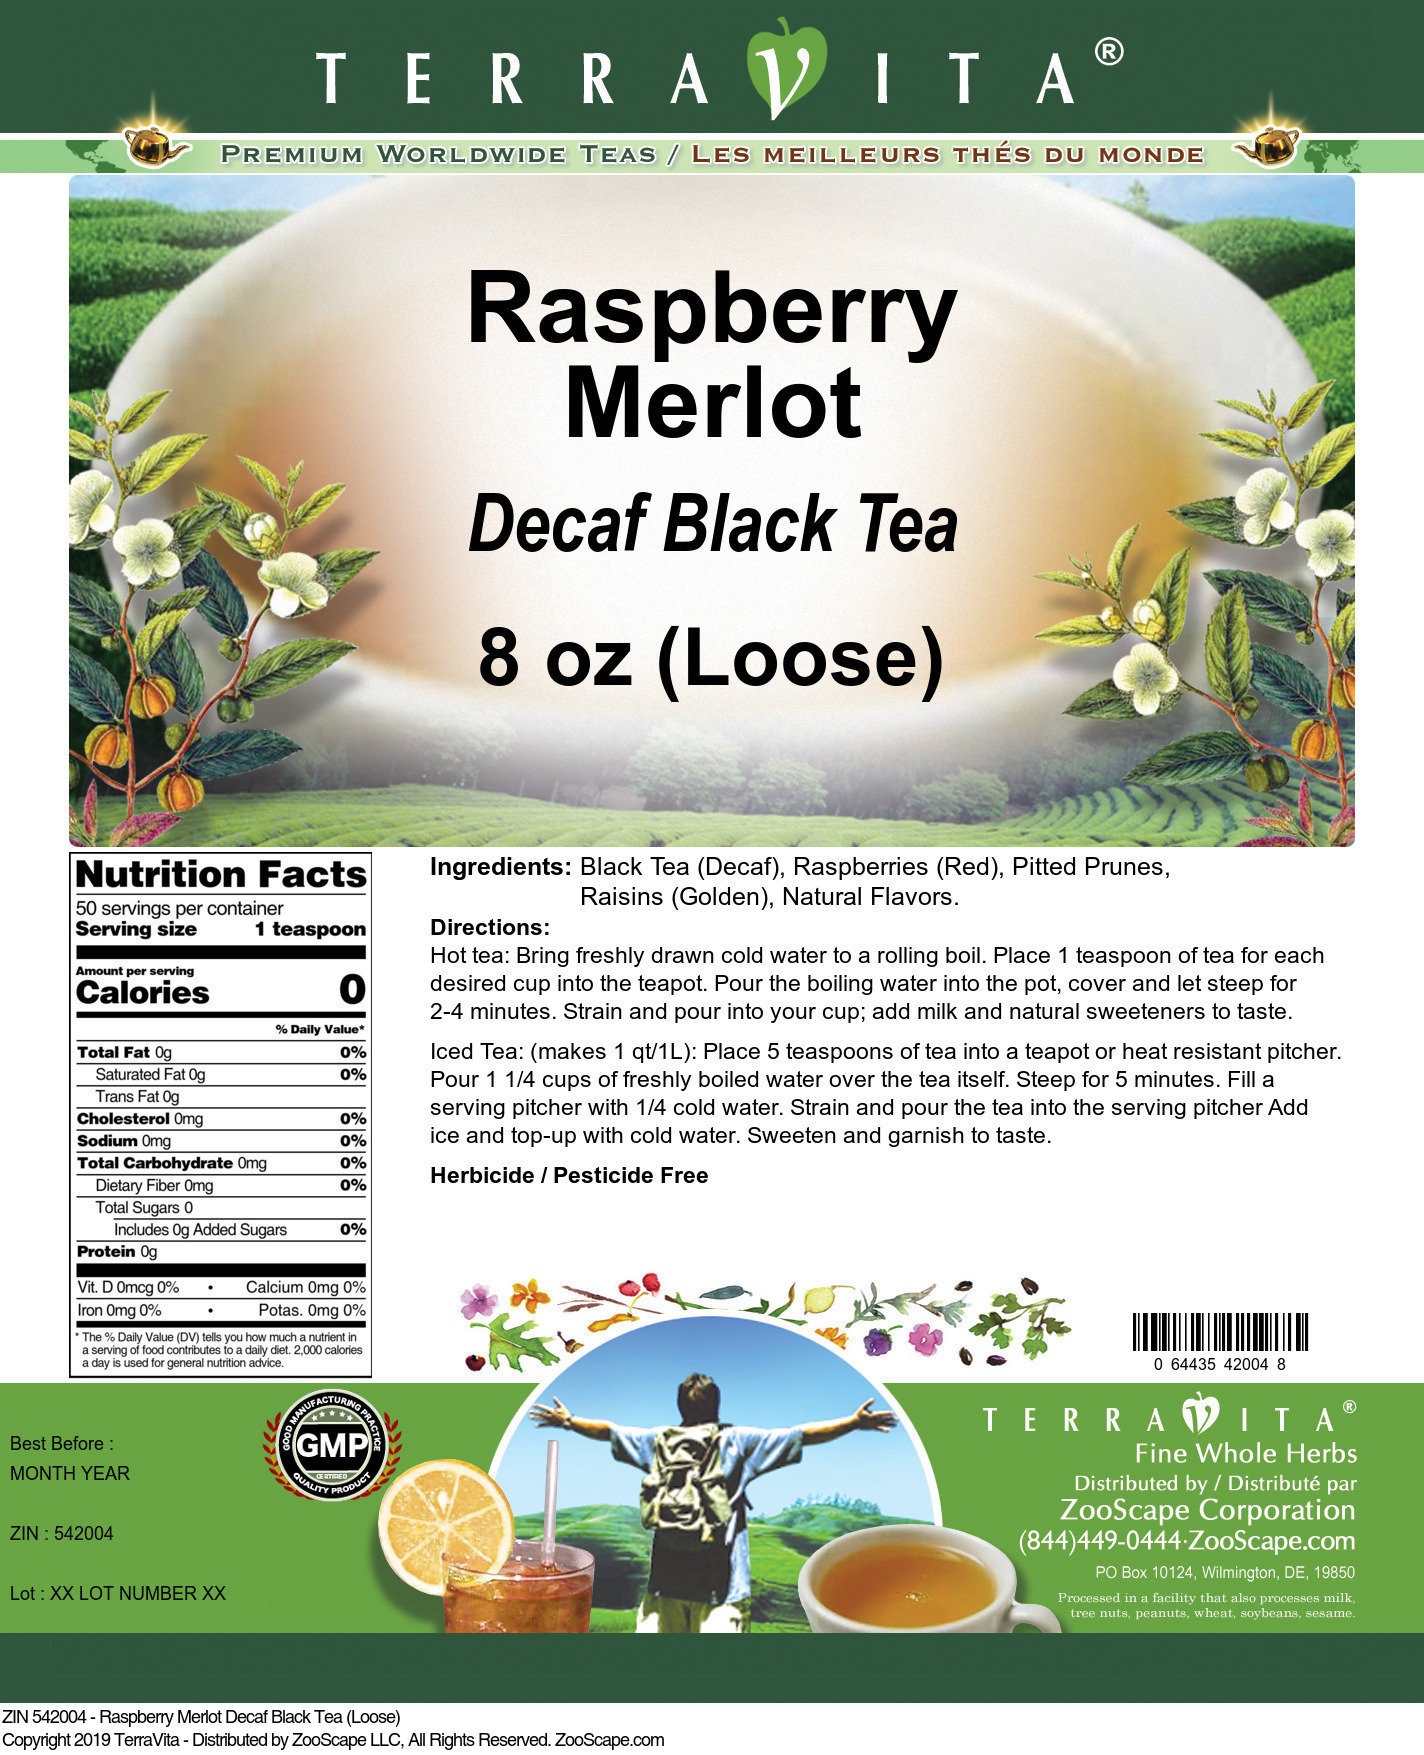 Raspberry Merlot Decaf Black Tea (Loose) - Label